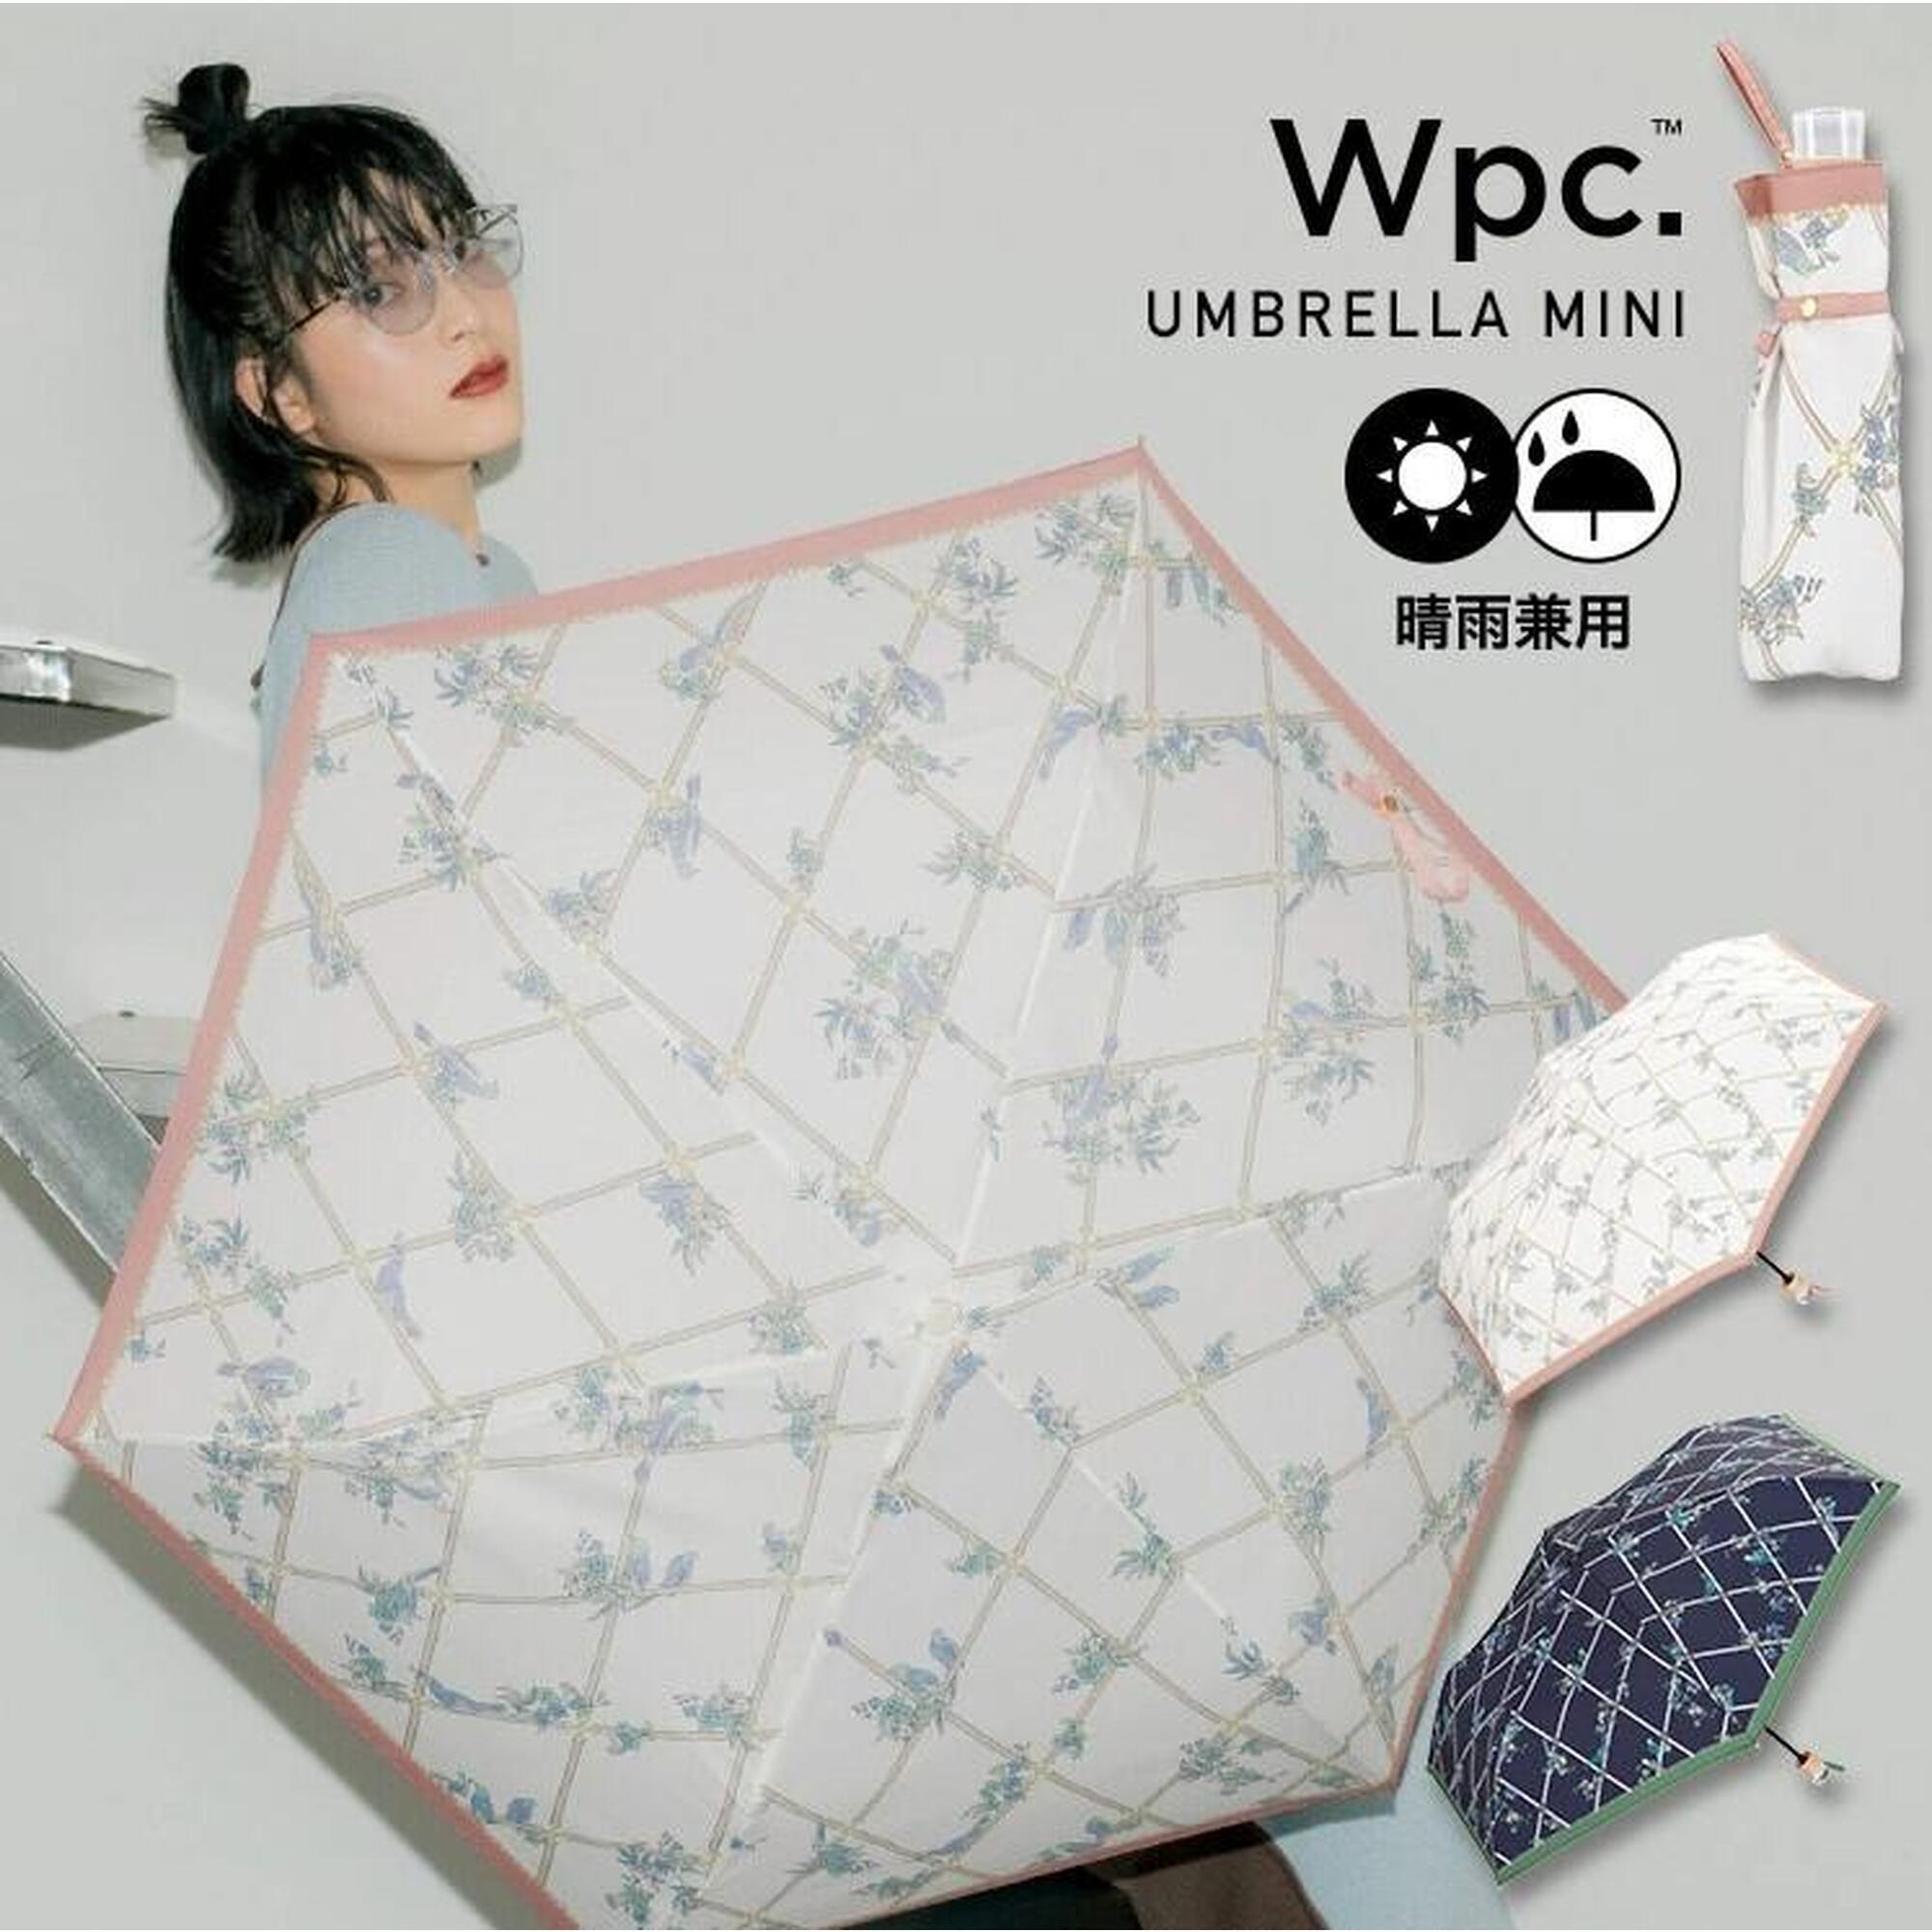 Bird & Cross Mini Foldable Umbrella - Navy Blue